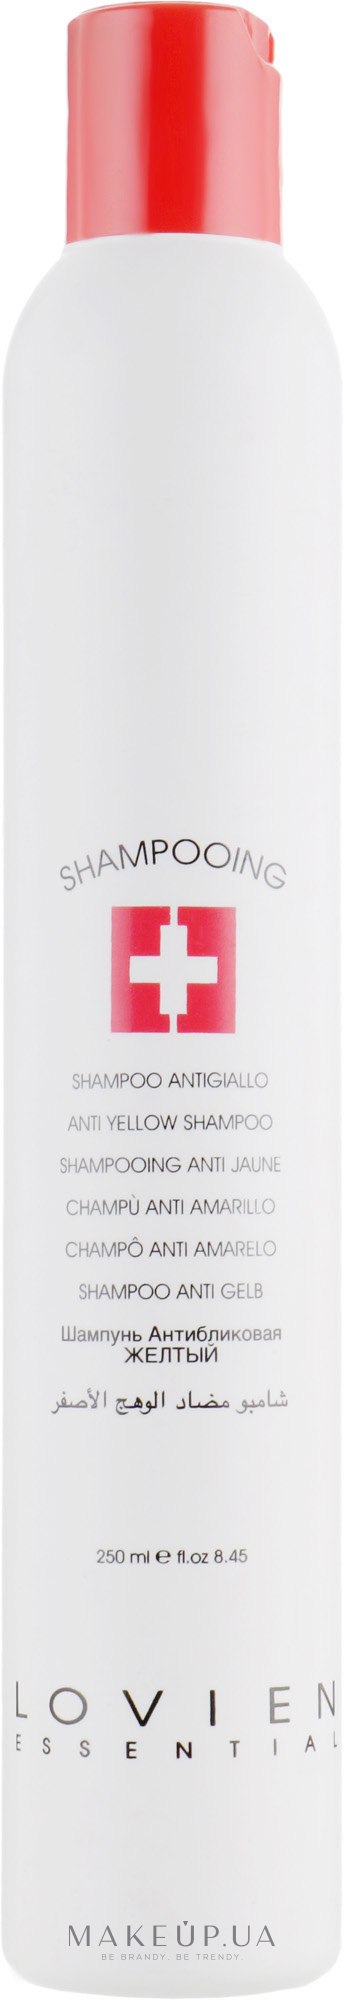 Шампунь антижелтый - Lovien Essential Shampoo Anti-Yellow — фото 250ml